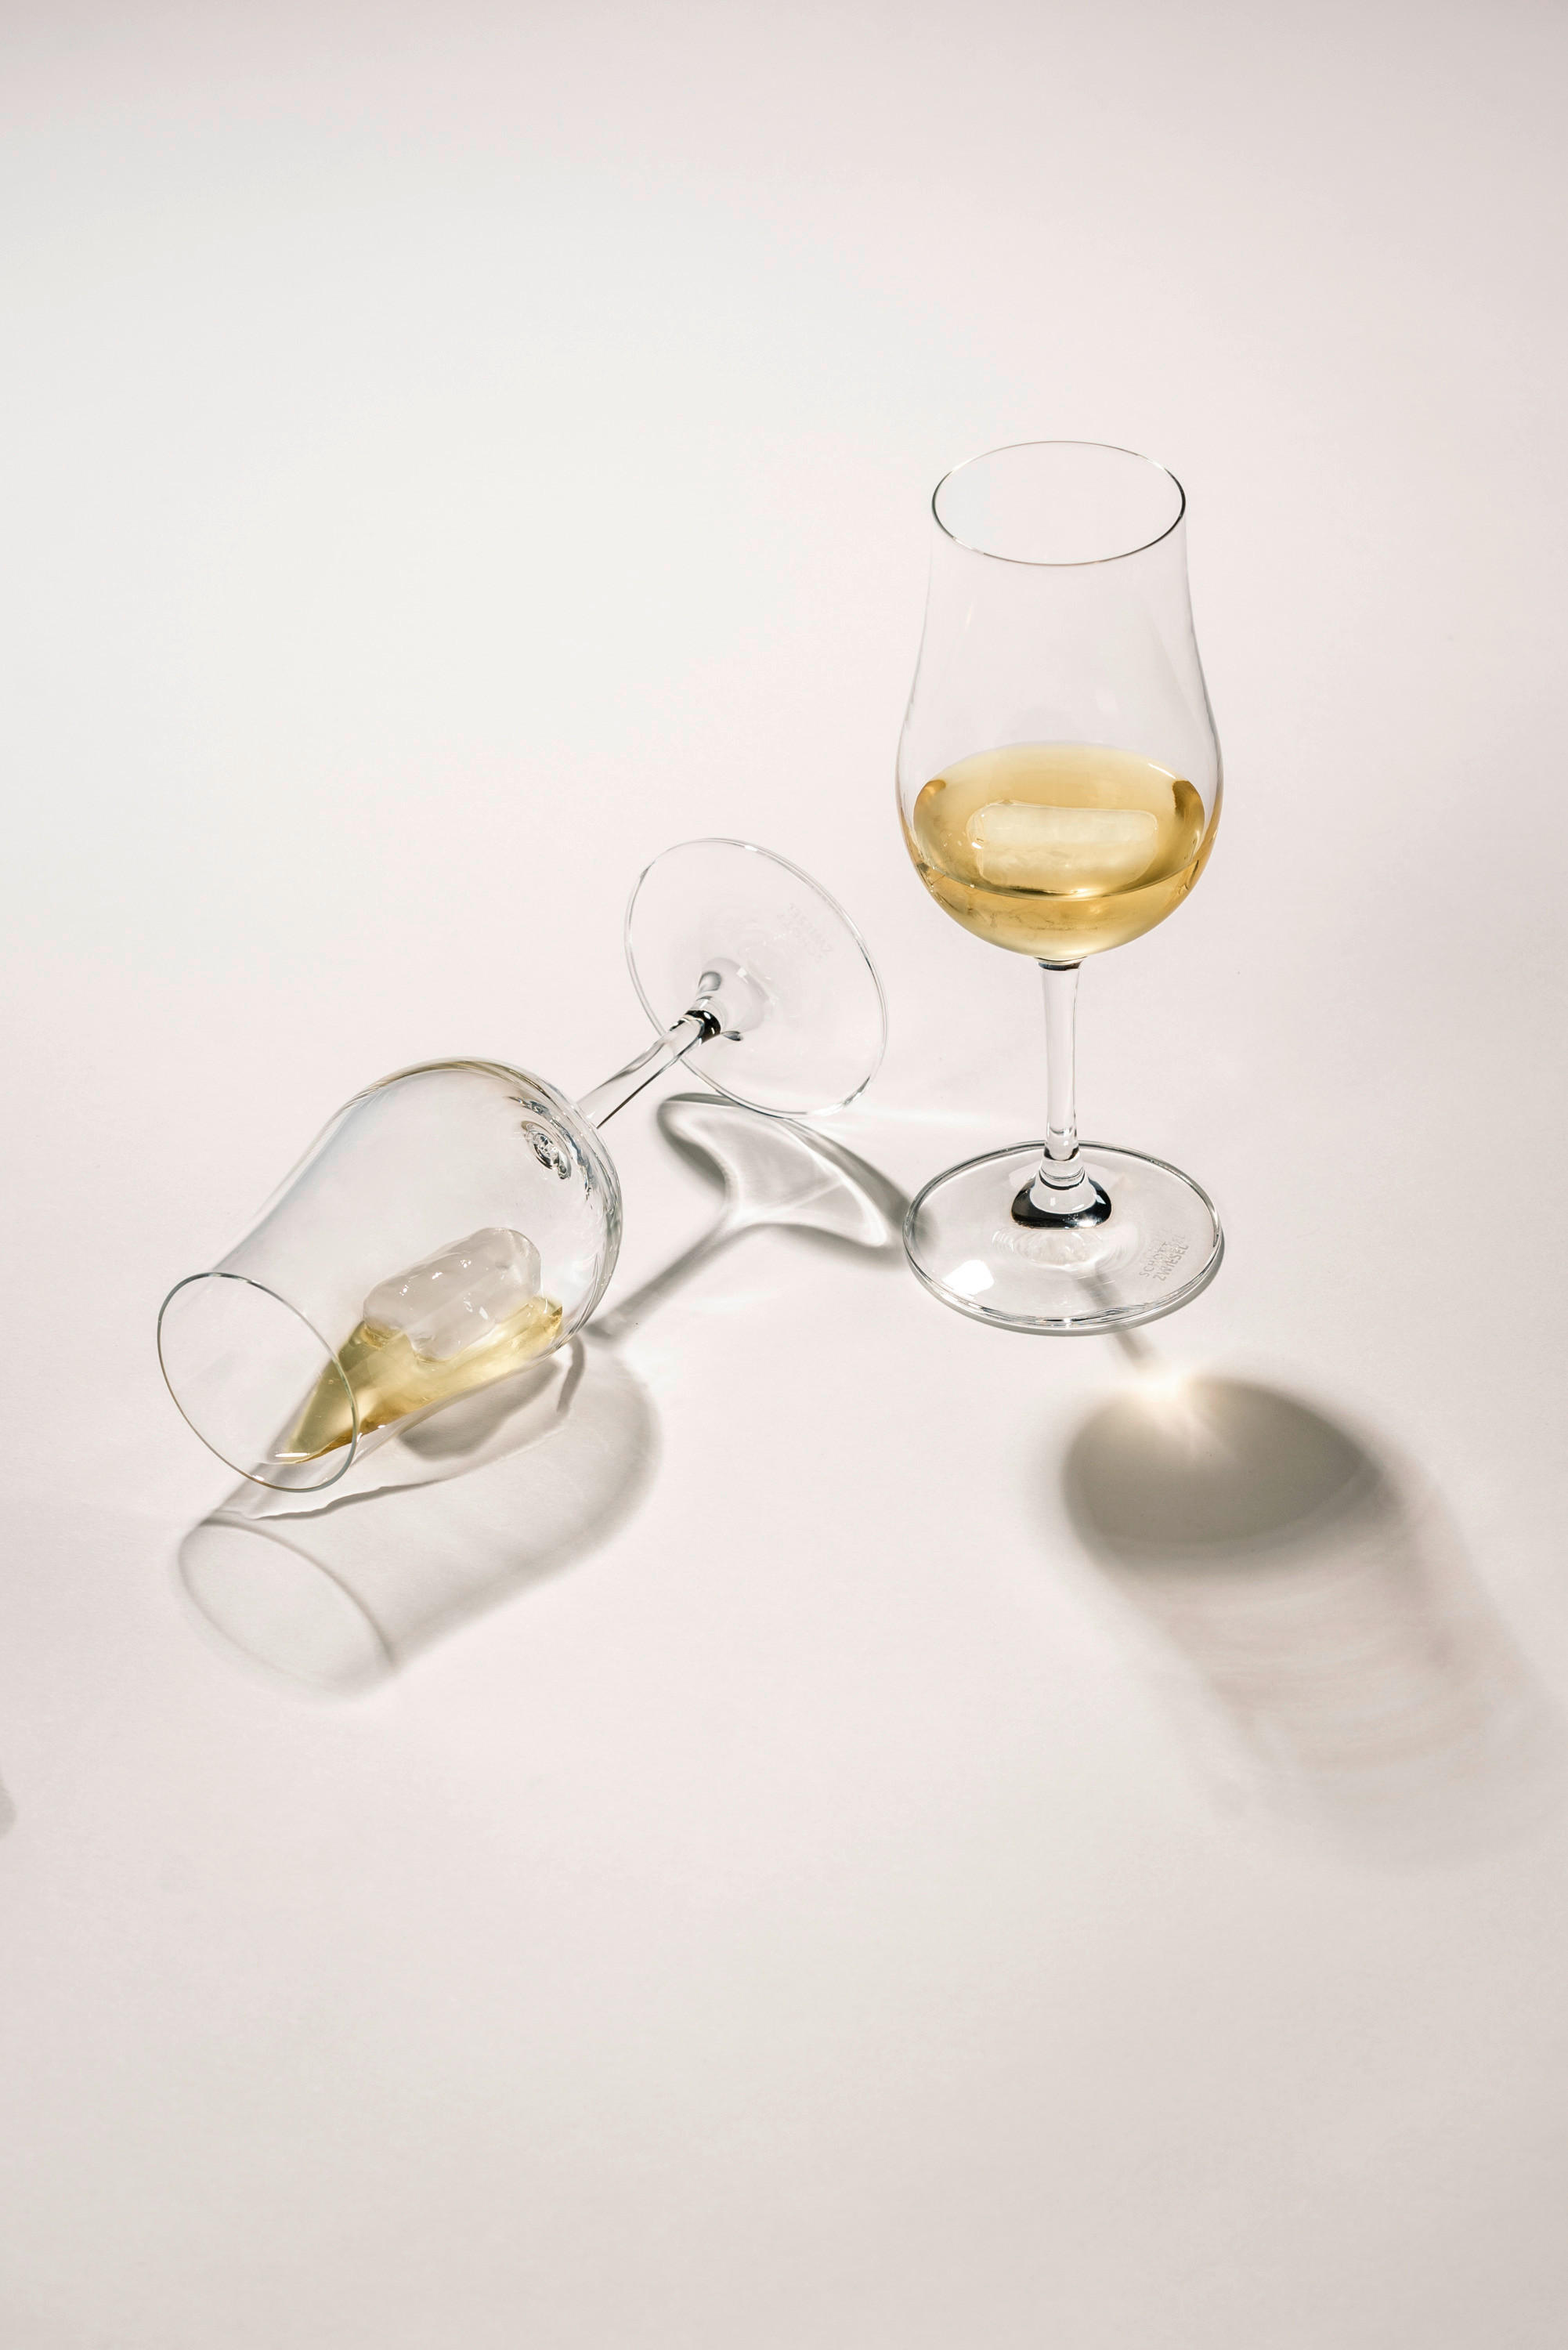 GLÄSERSET Bar Special Whisky Tasting 4-teilig  - Klar, KONVENTIONELL, Glas (6,6/17,5cm) - Schott Zwiesel